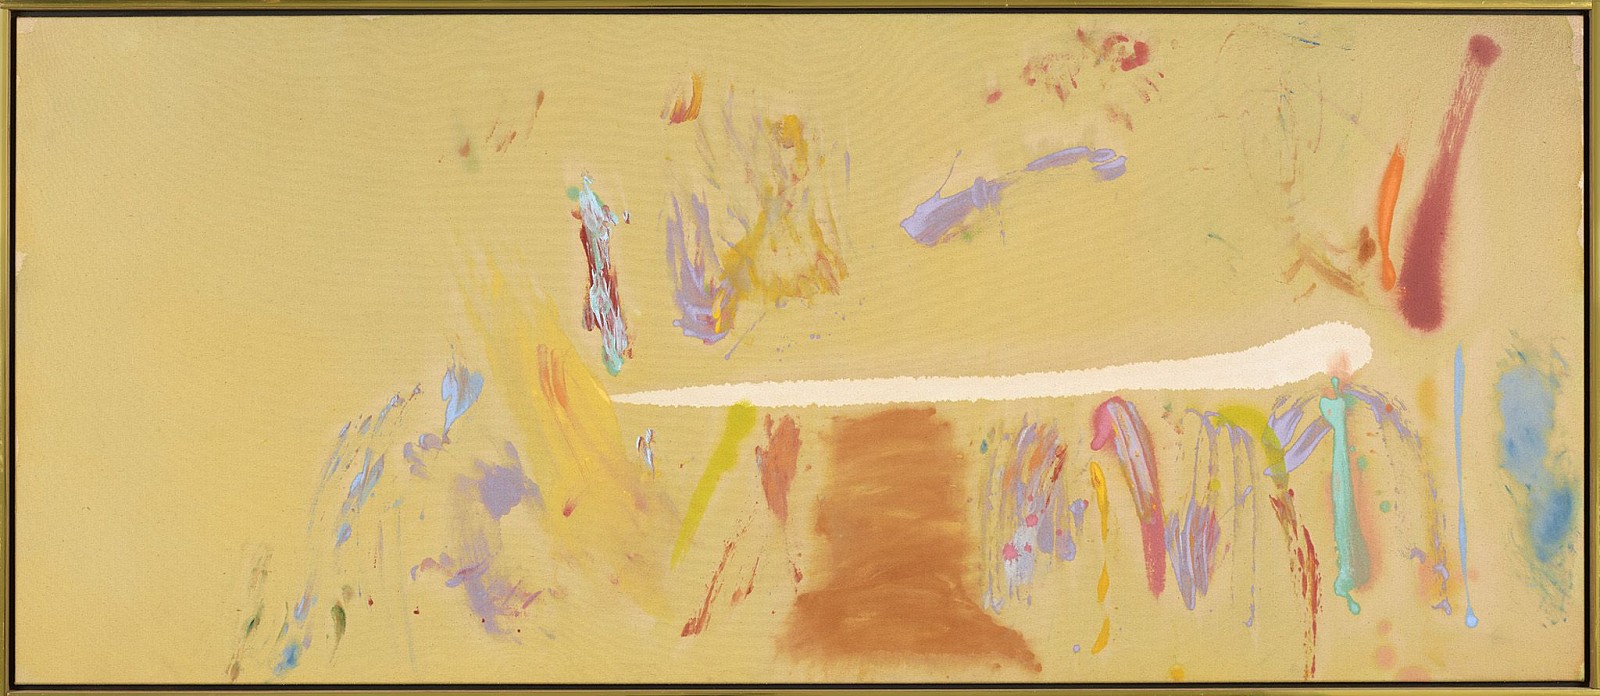 Dan Christensen, Beulah Land | SOLD, 1978
Acrylic on canvas, 29 1/8 x 68 3/4 in. (74 x 174.6 cm)
CHR-00094